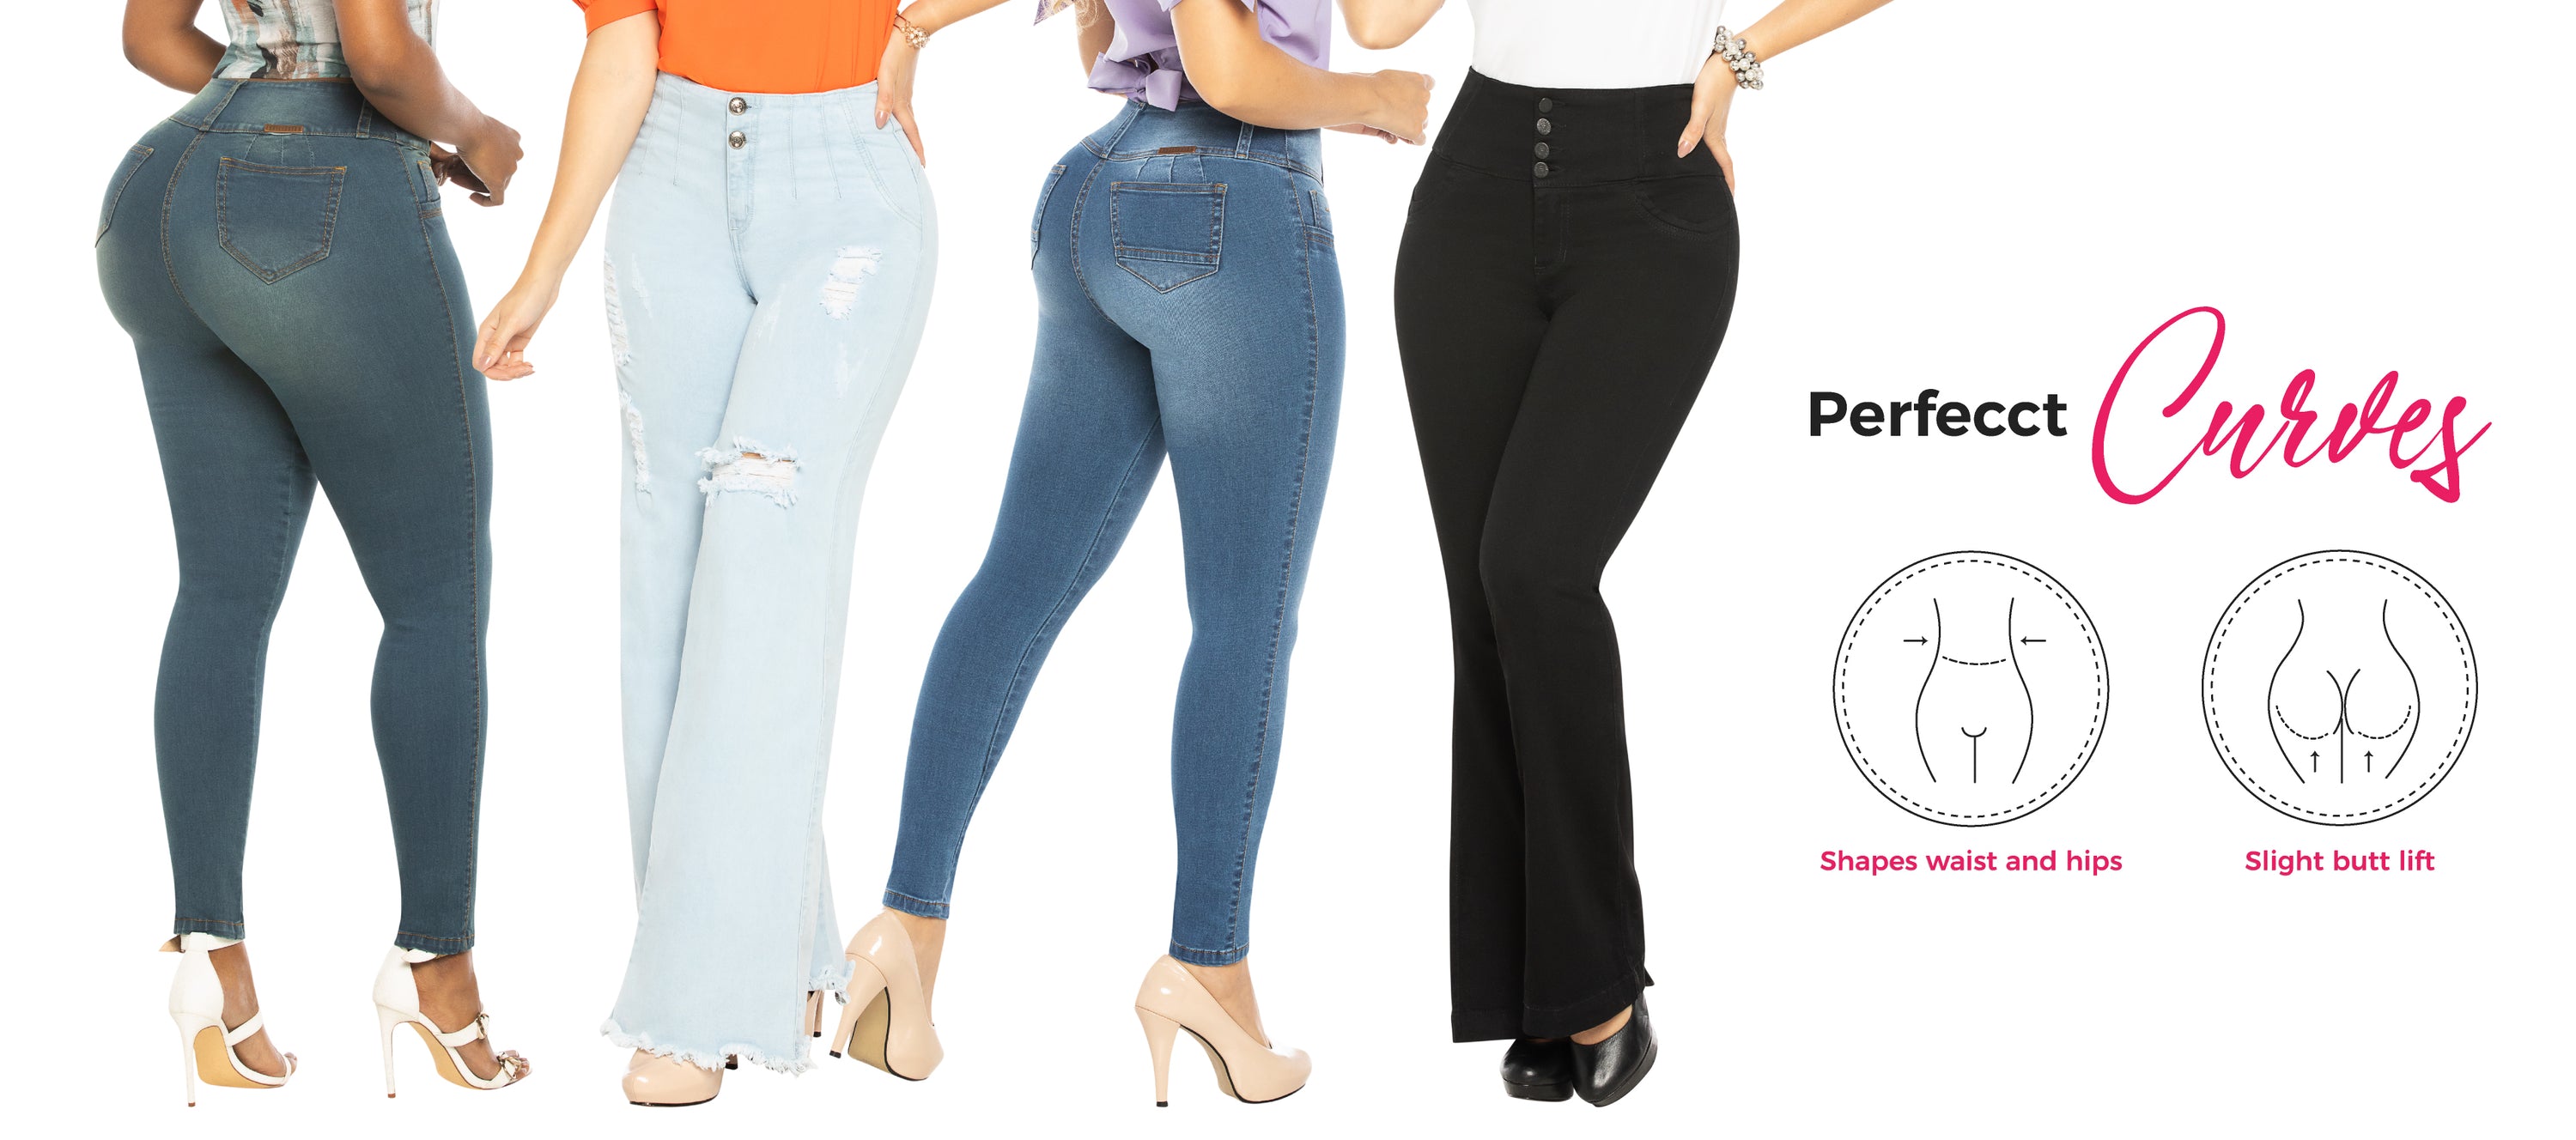 Equilibrium Colombian Body Shapers & Women Jeans. Shapewear